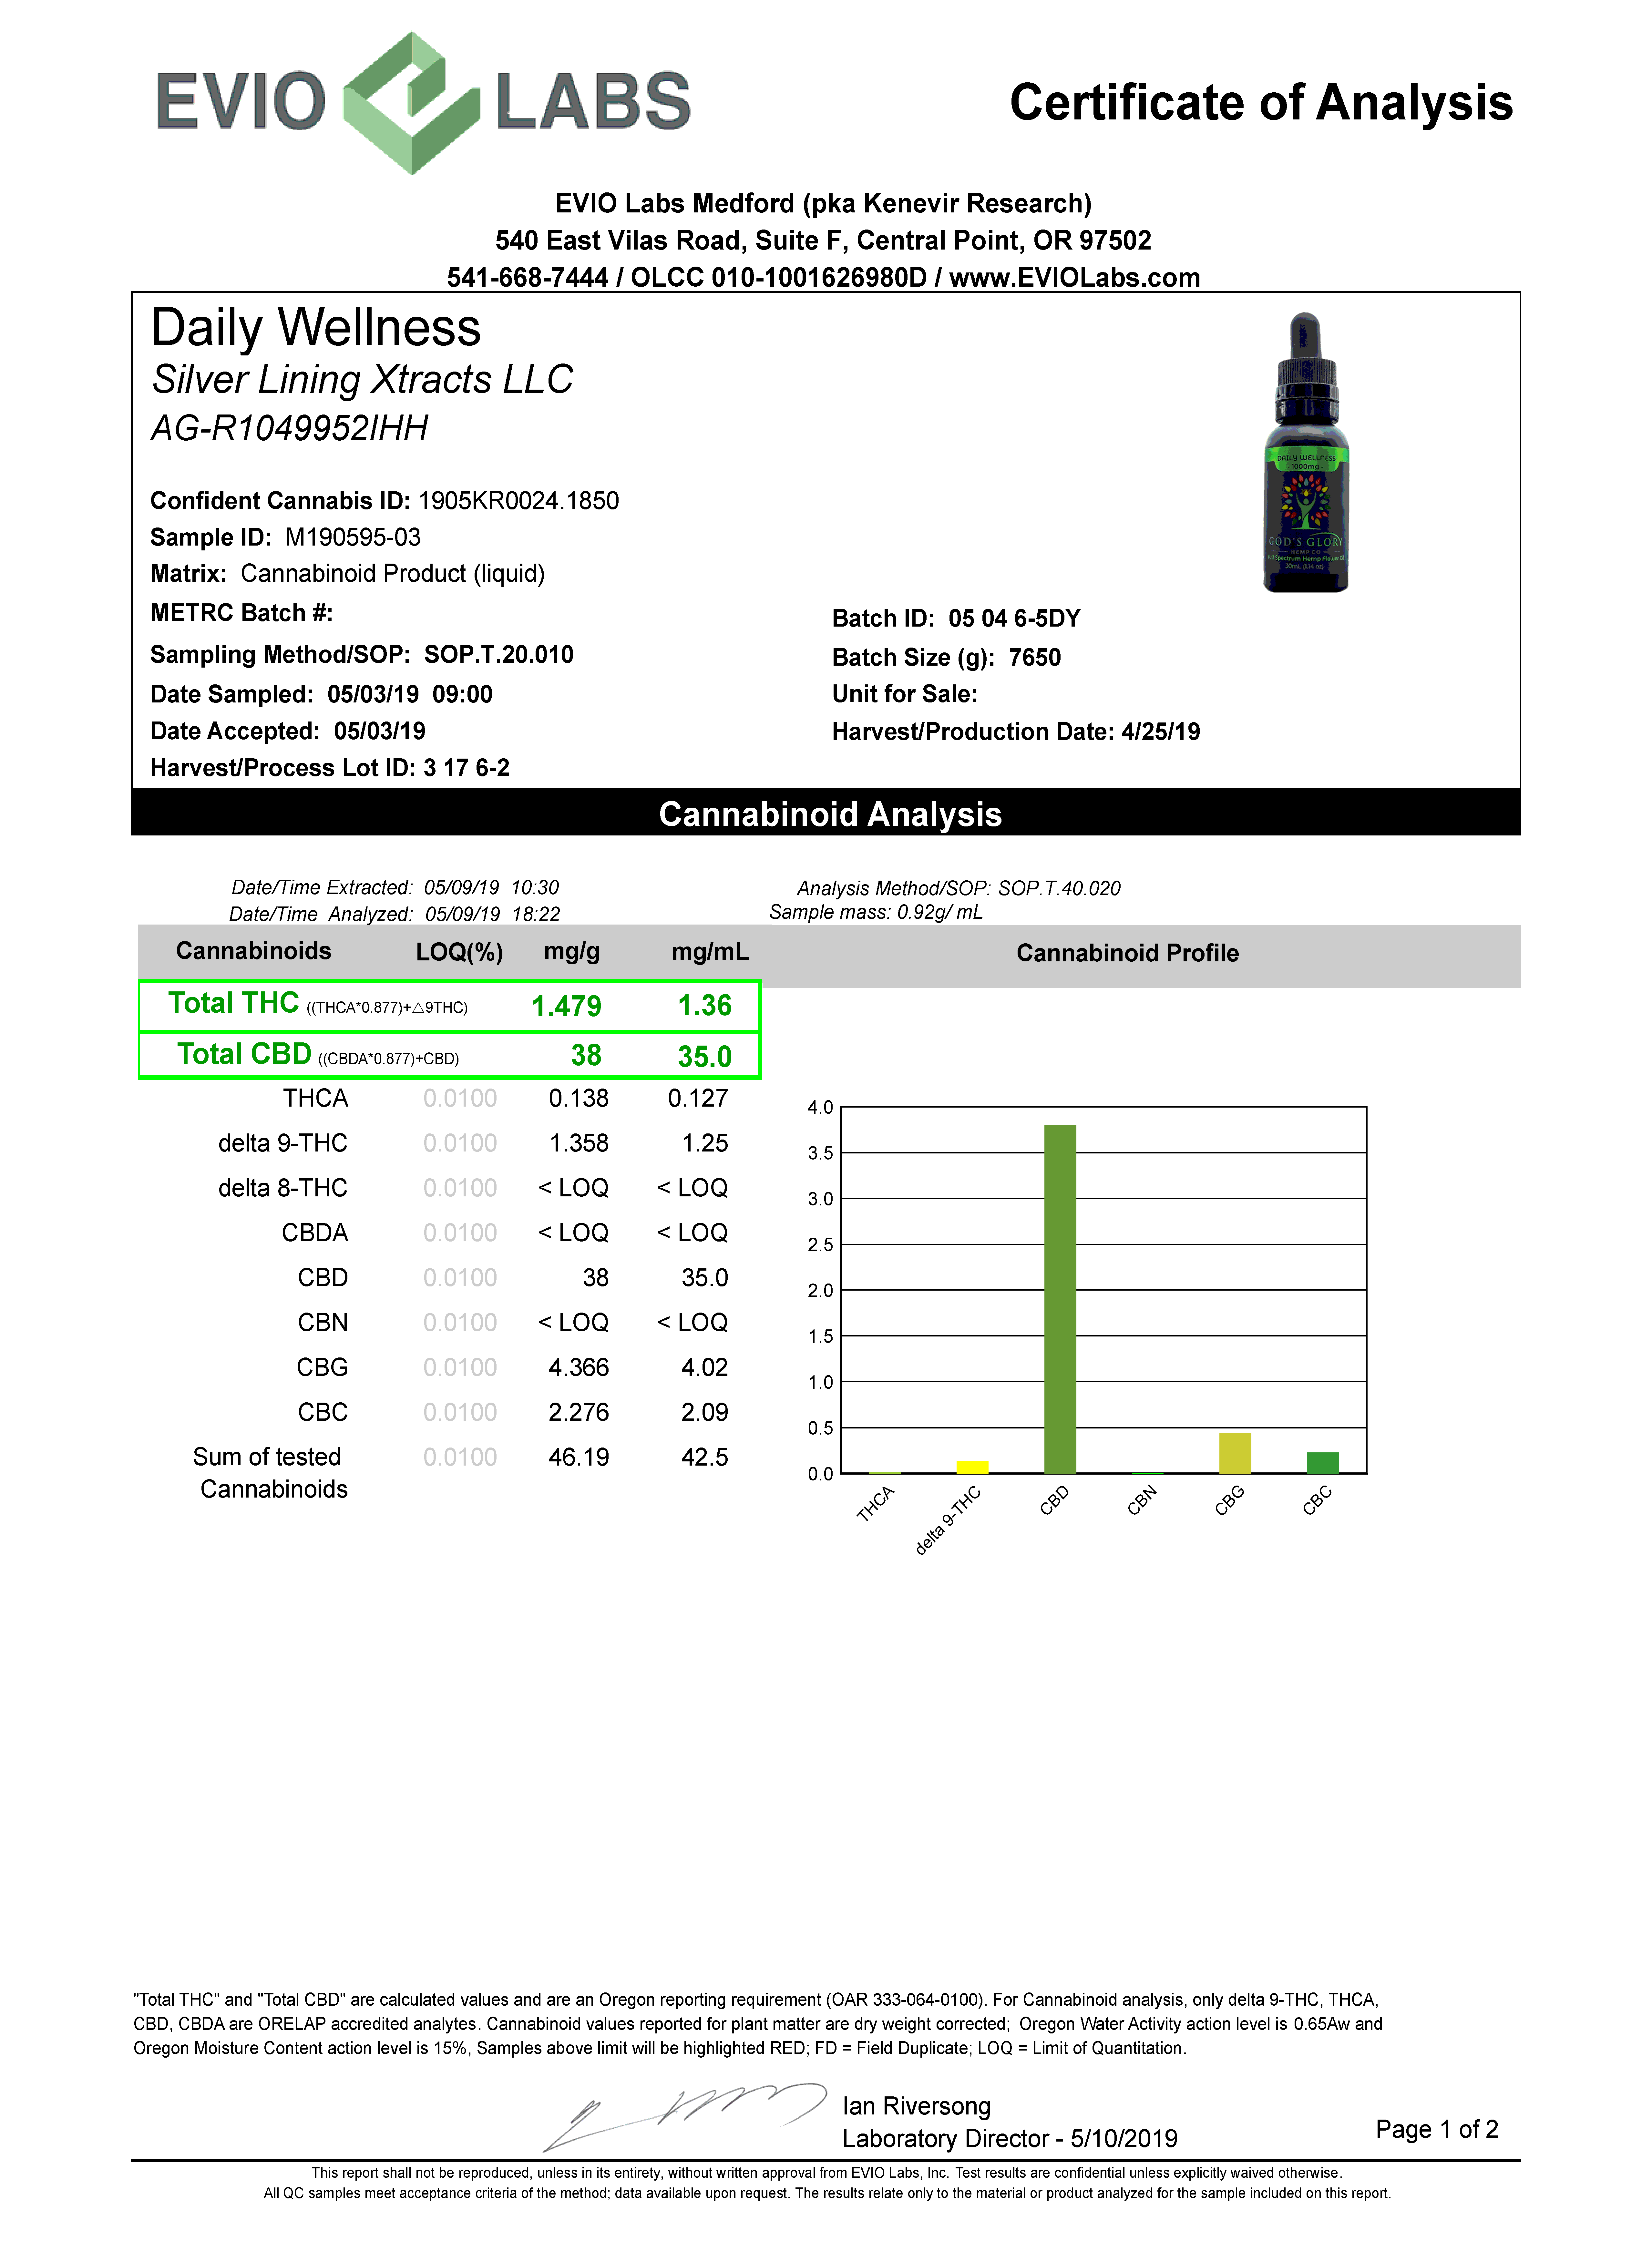 Cannabinoid Analysis Documentation for Daily Wellness CBD Oil Tincture